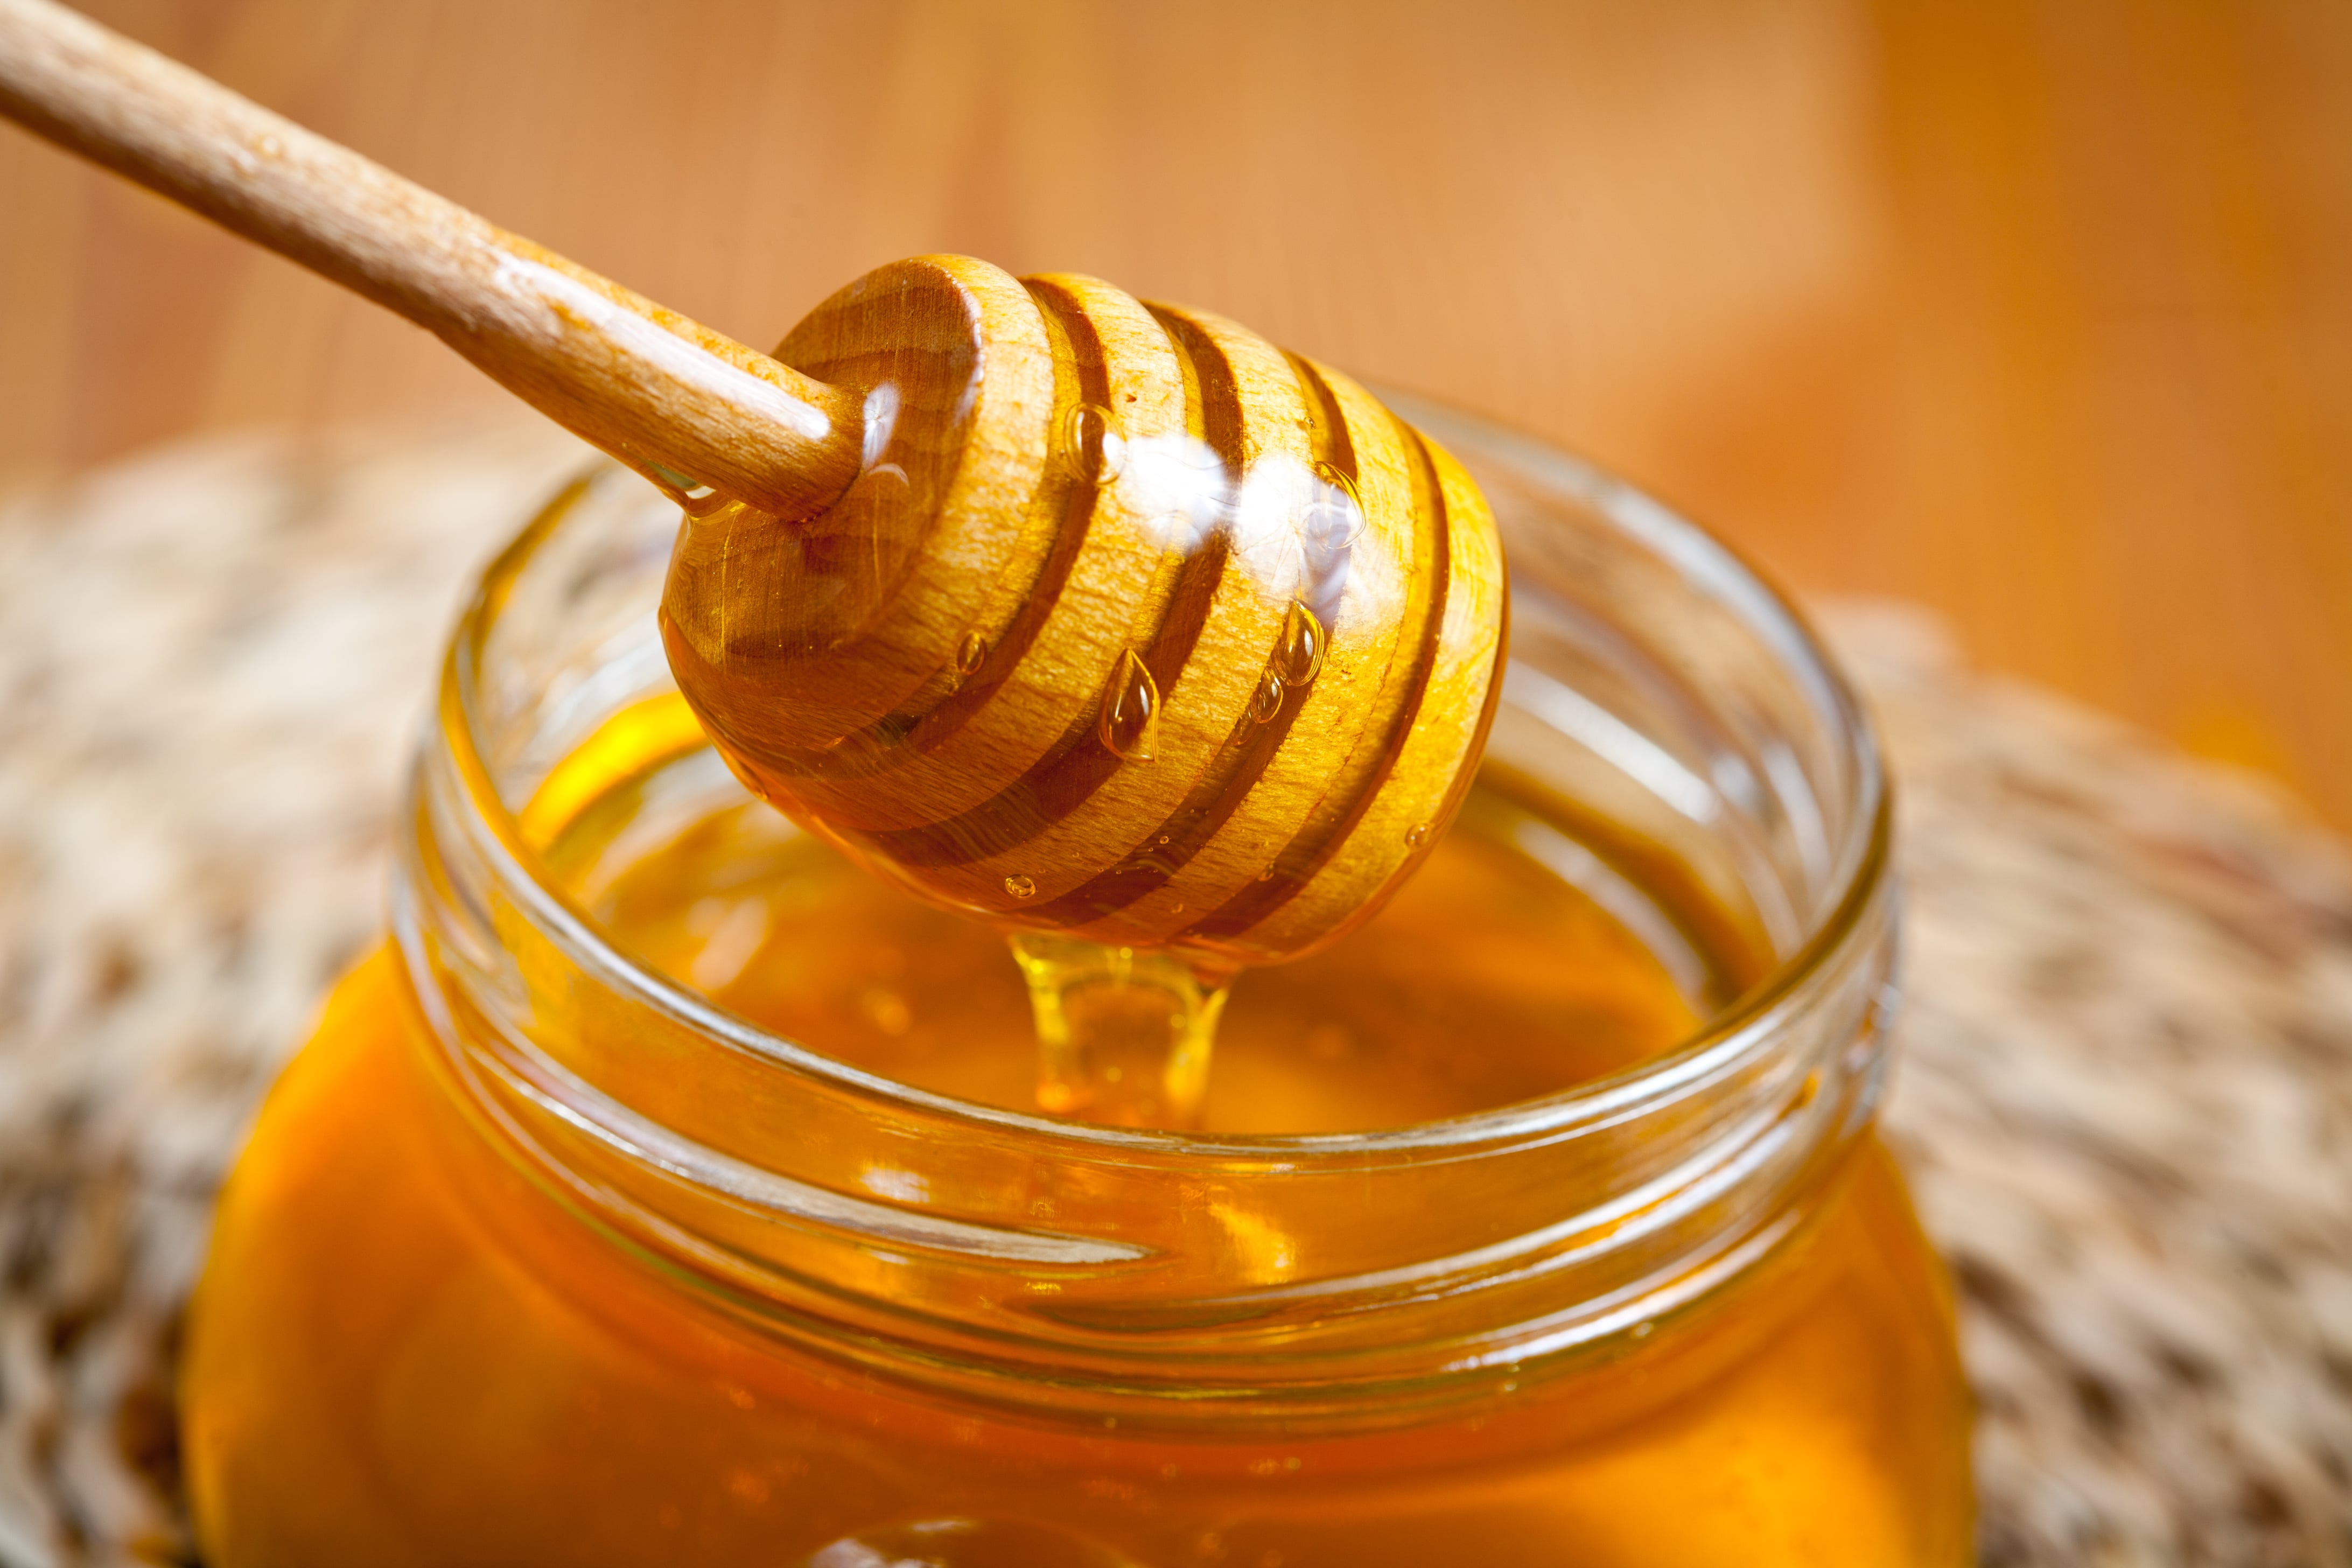 Wooden honey dipper dripping honey over a jar of honey.